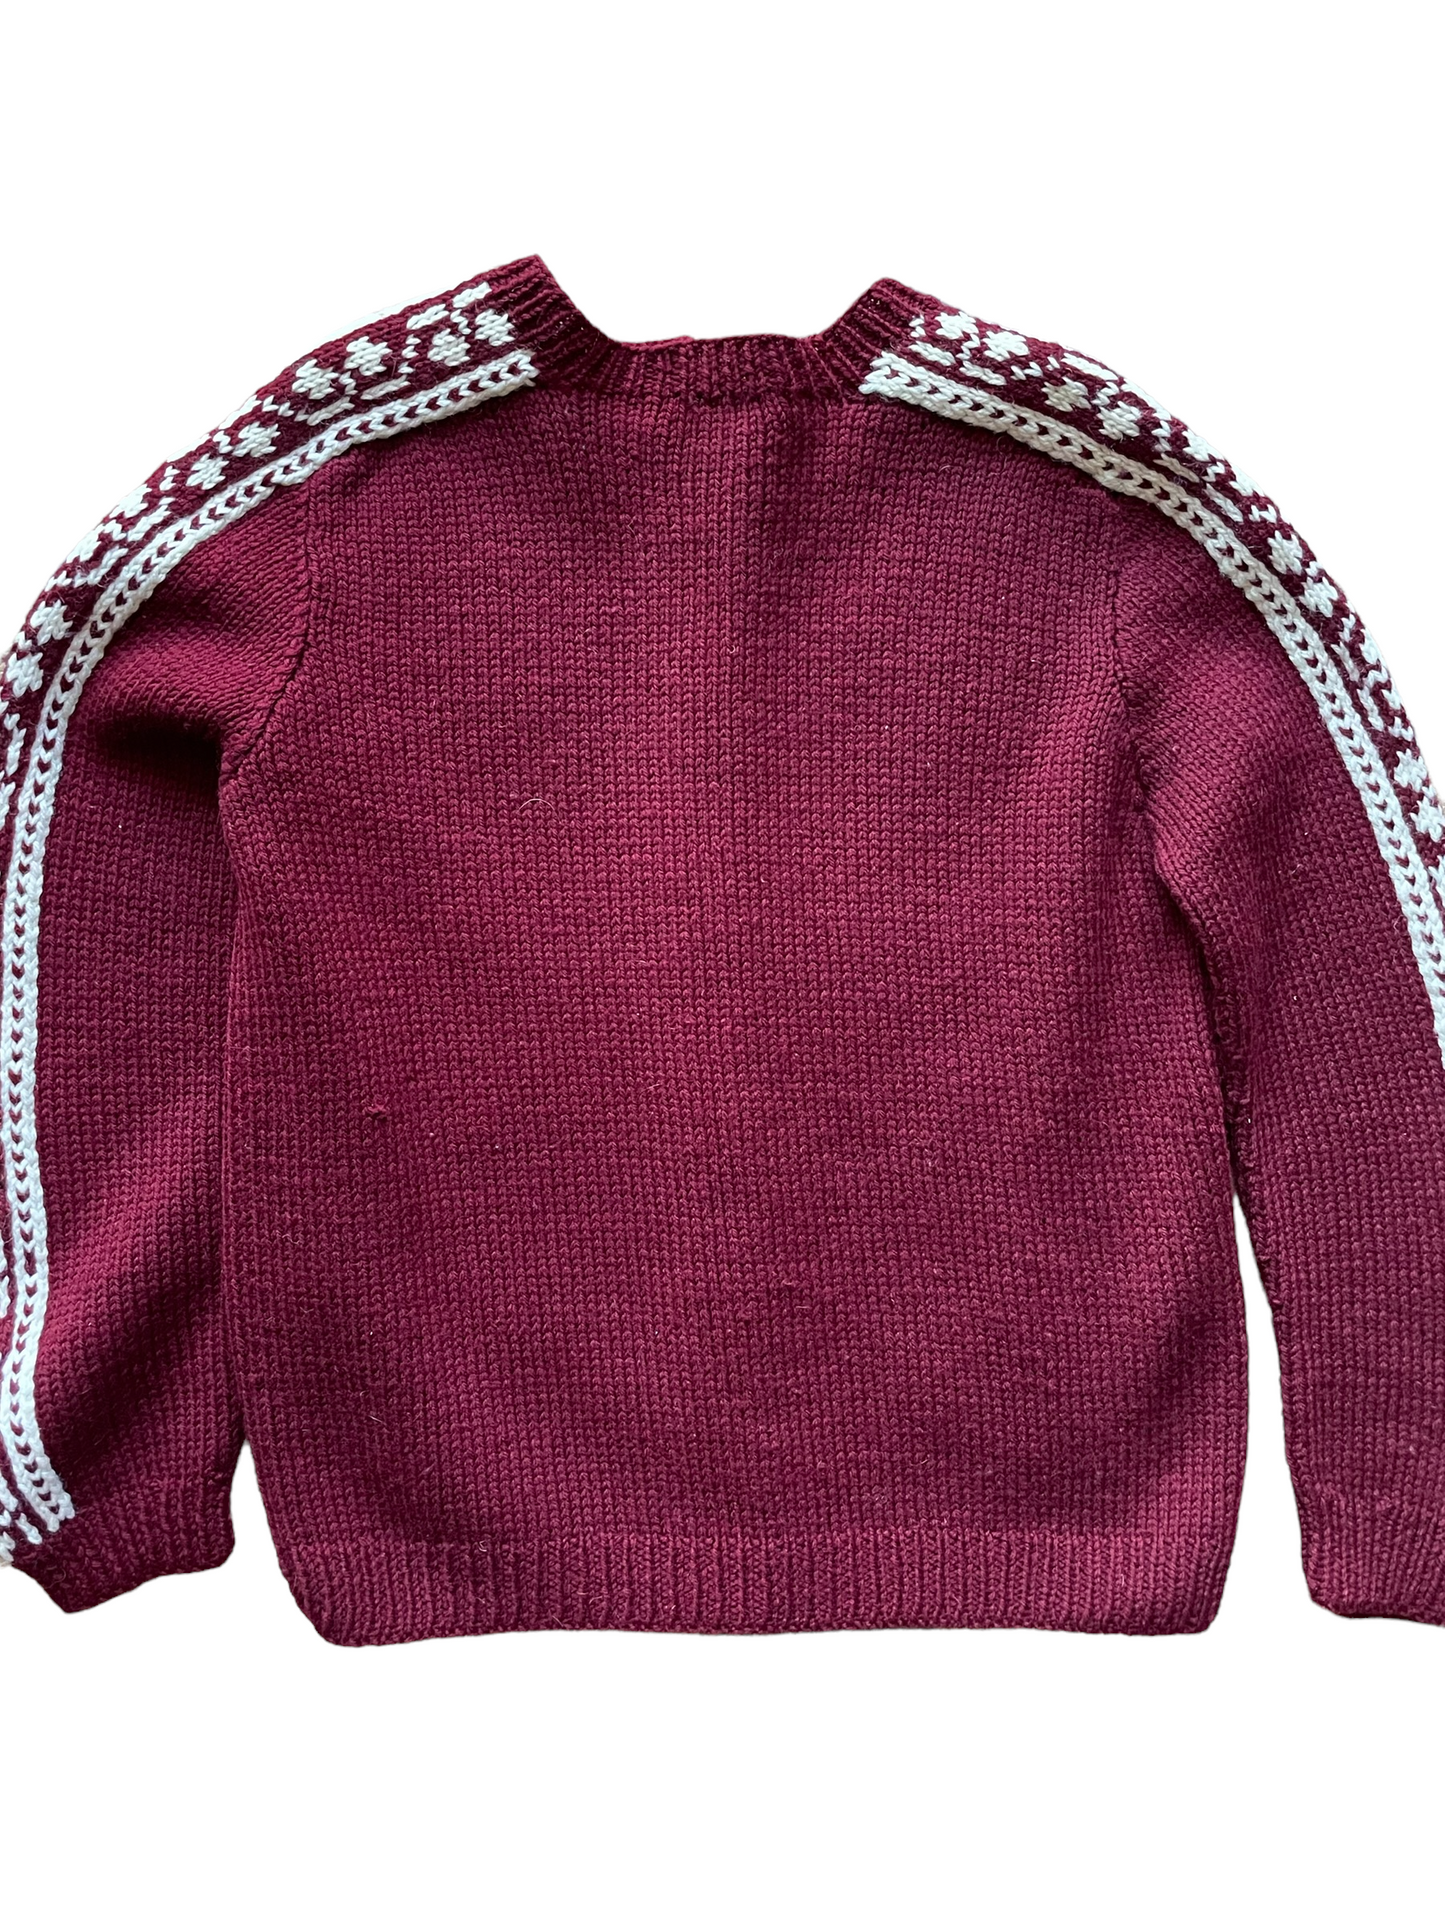 1960s handknit burgundy snowflake cardigan sweater back view  barn owl vintage seattle true vintage